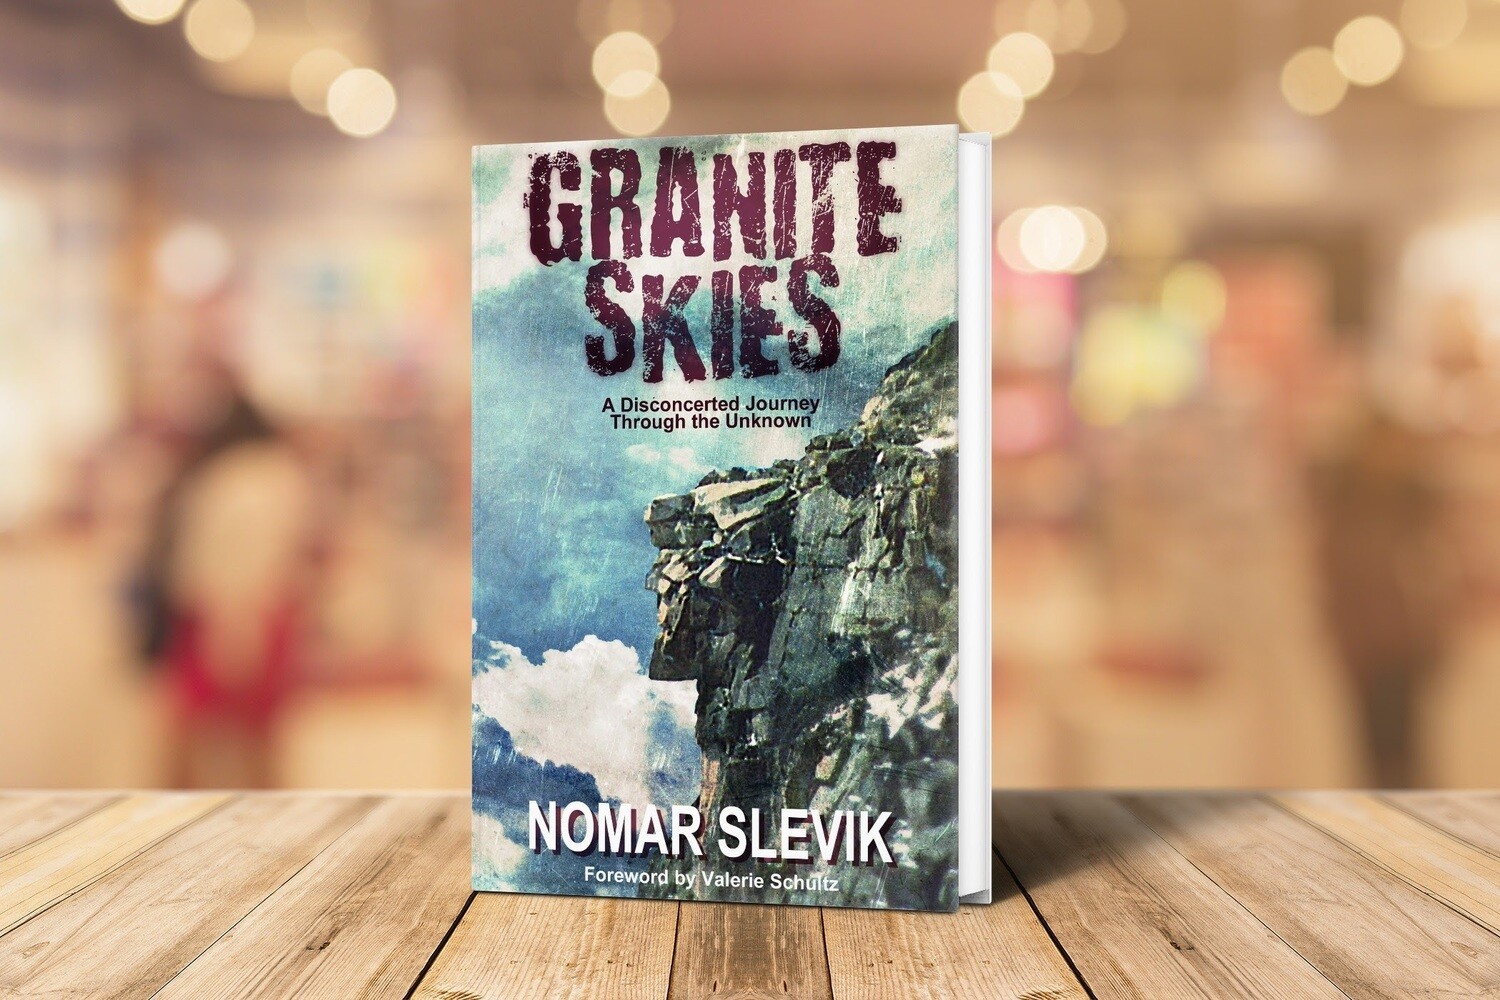 Granite Skies